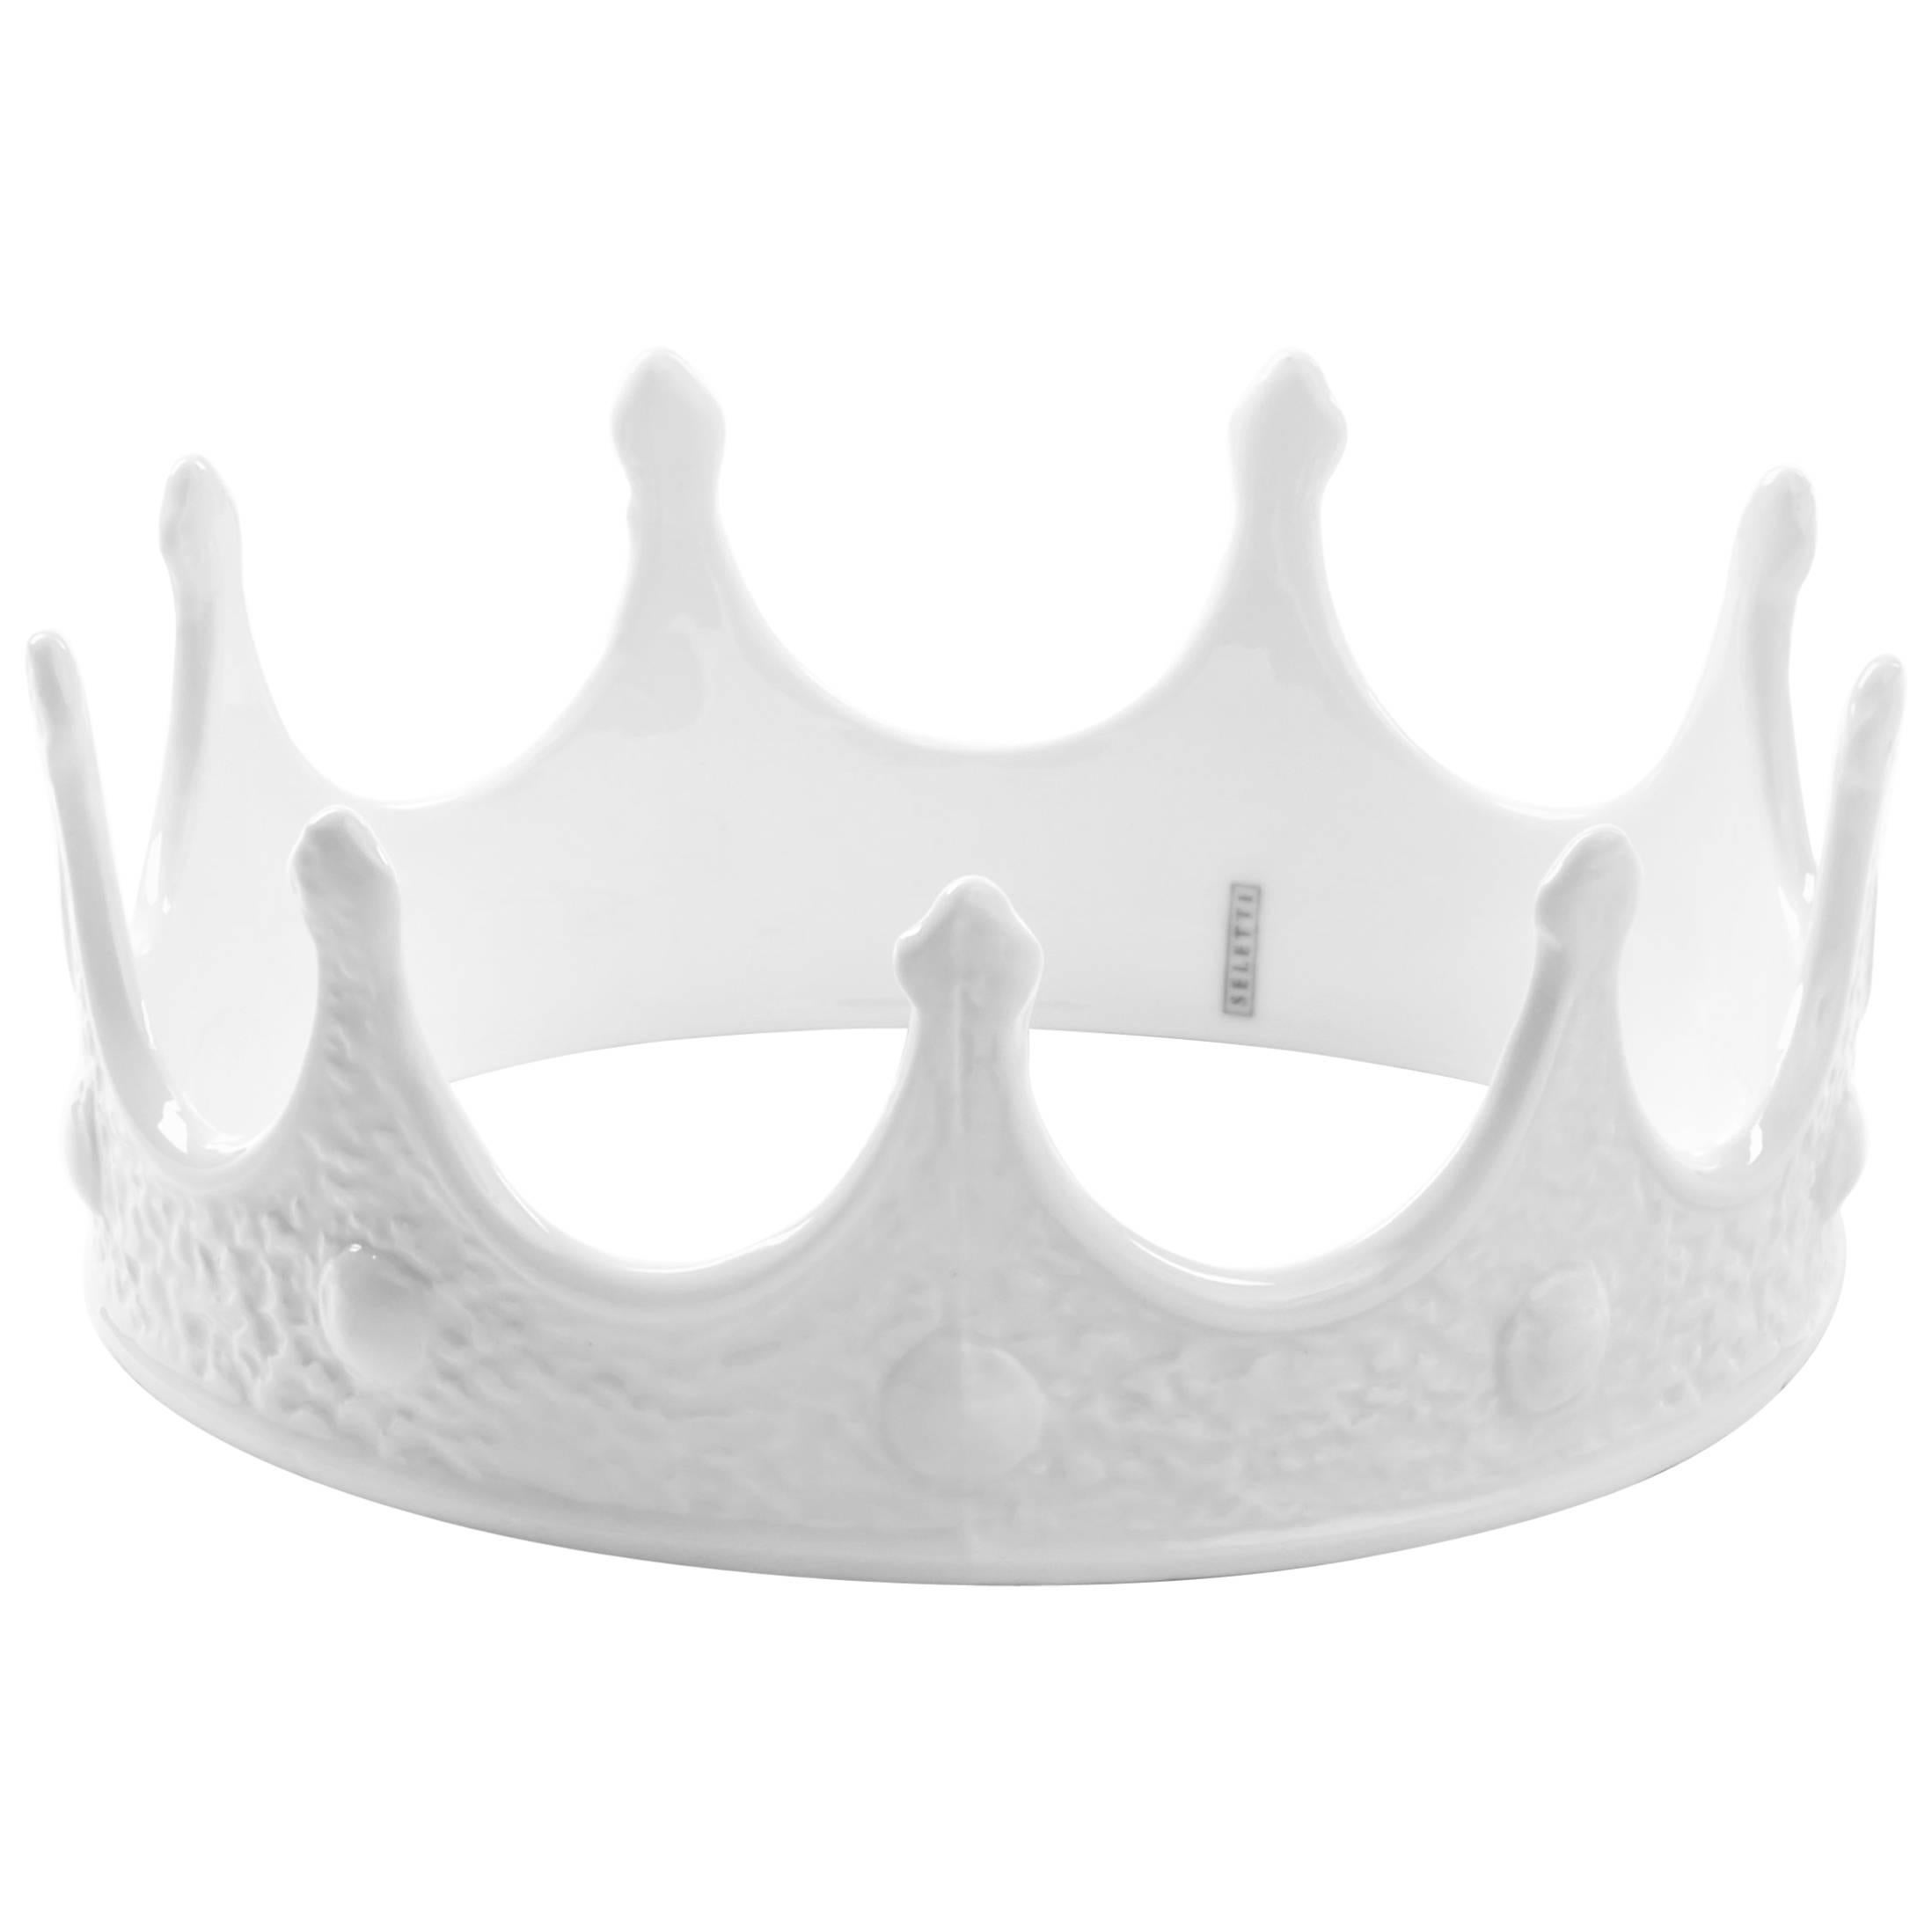 Seletti "Memorabilia" Porcelain My Crown